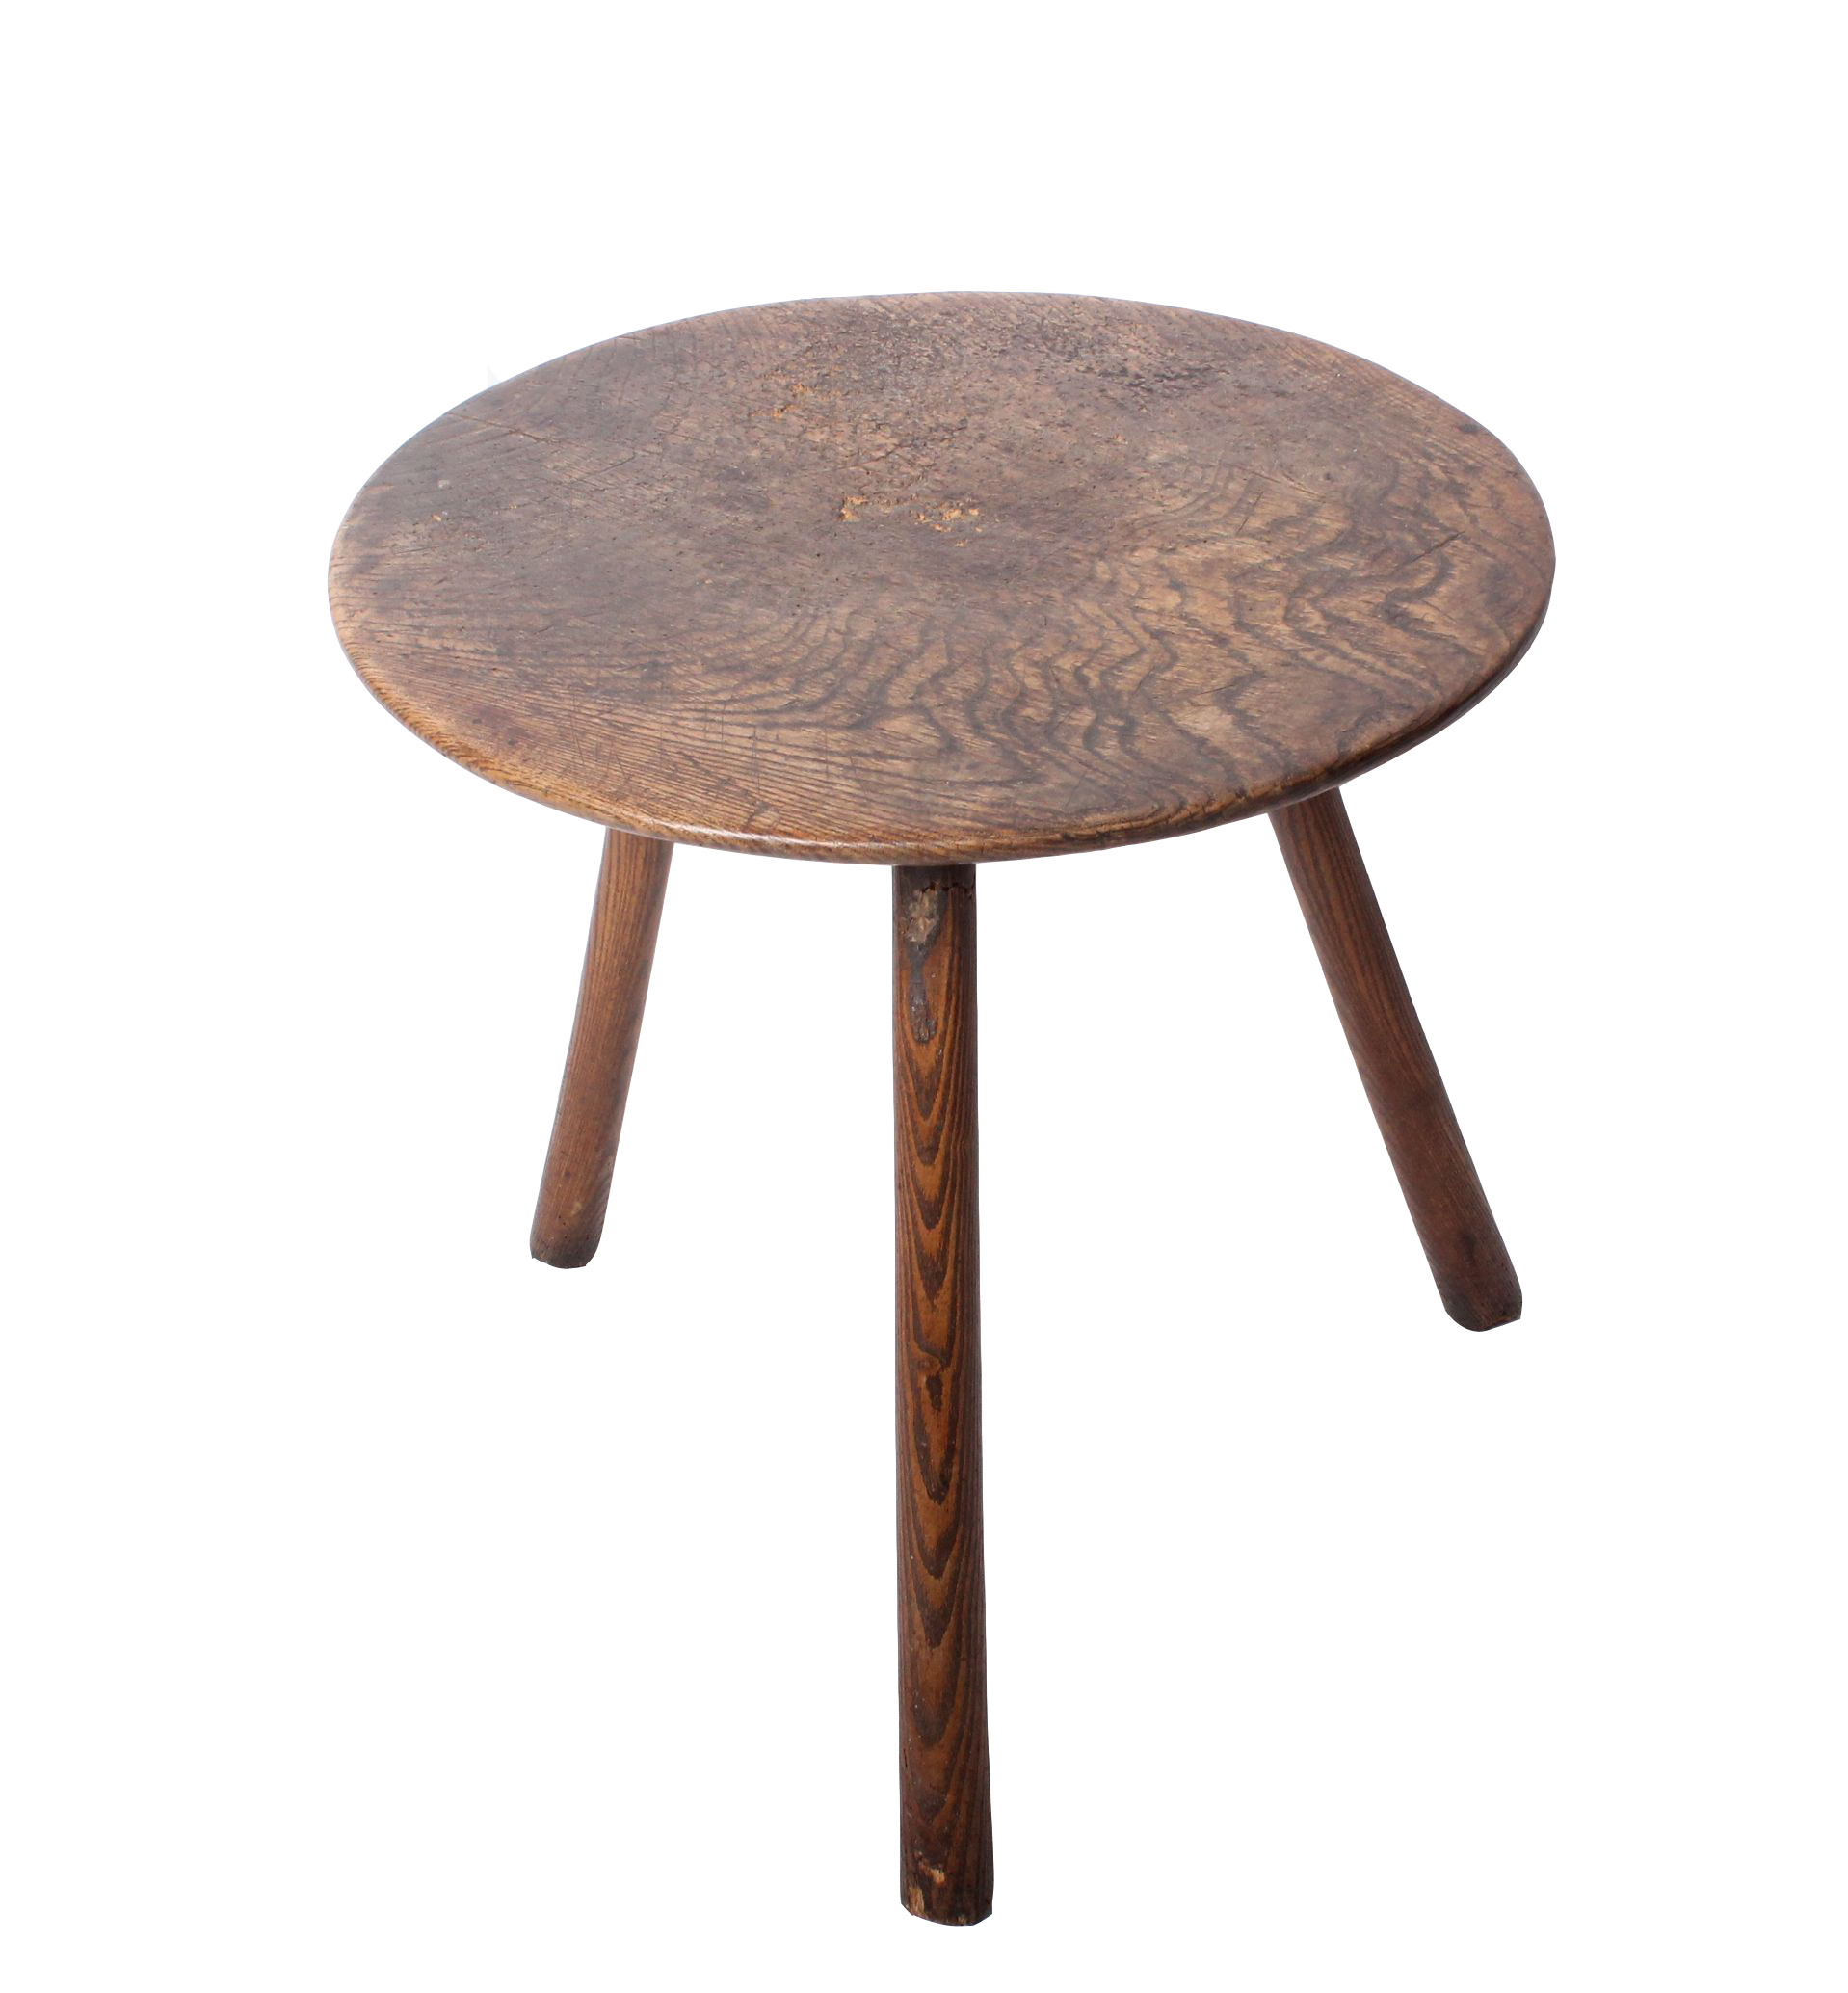 An 18th century elm dish top table on three legs, top diameter 54cm h.56cm